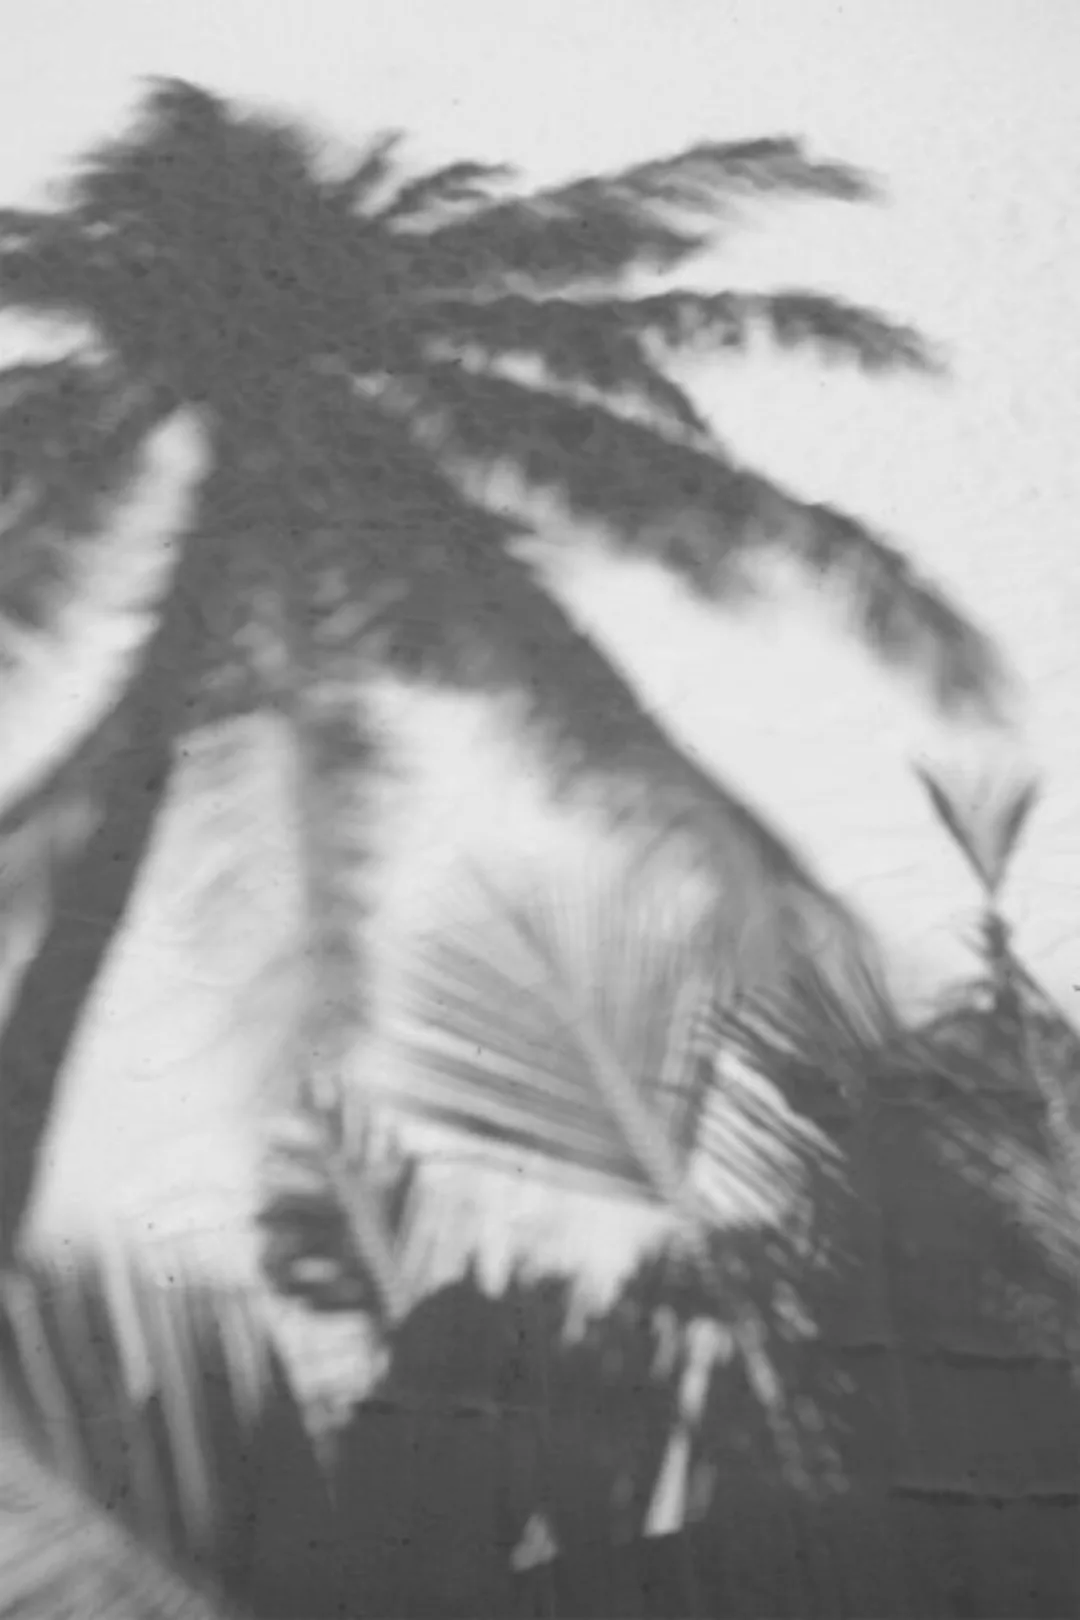 Poster / Leinwandbild - Palms On The Beach günstig online kaufen